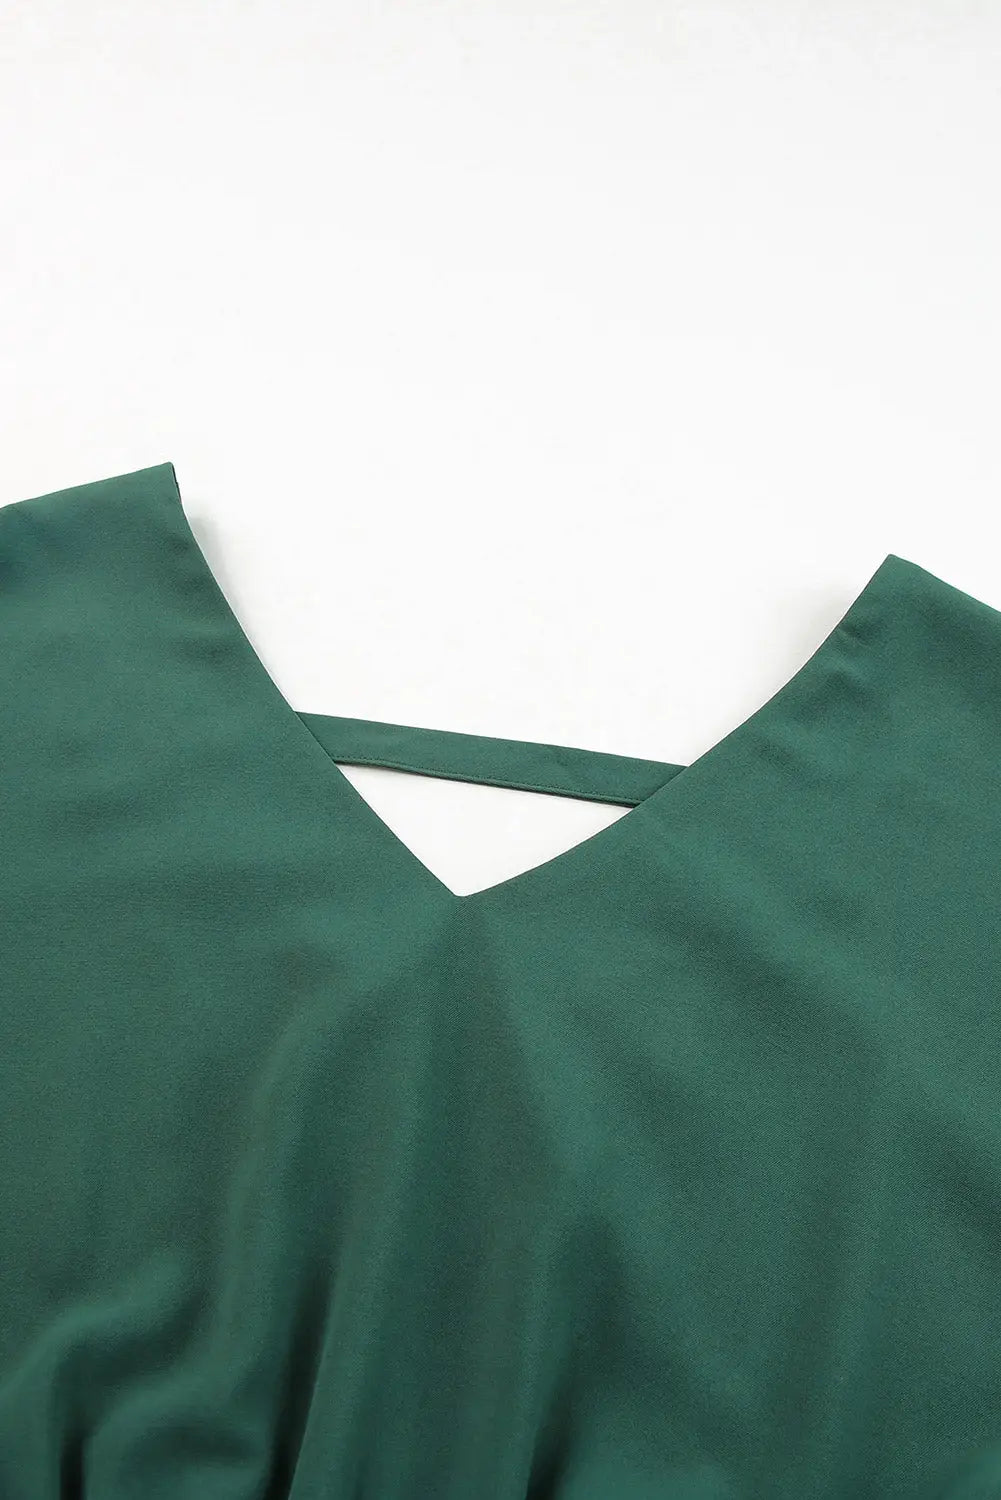 Green ruffled v neck high waist mini dress - dresses